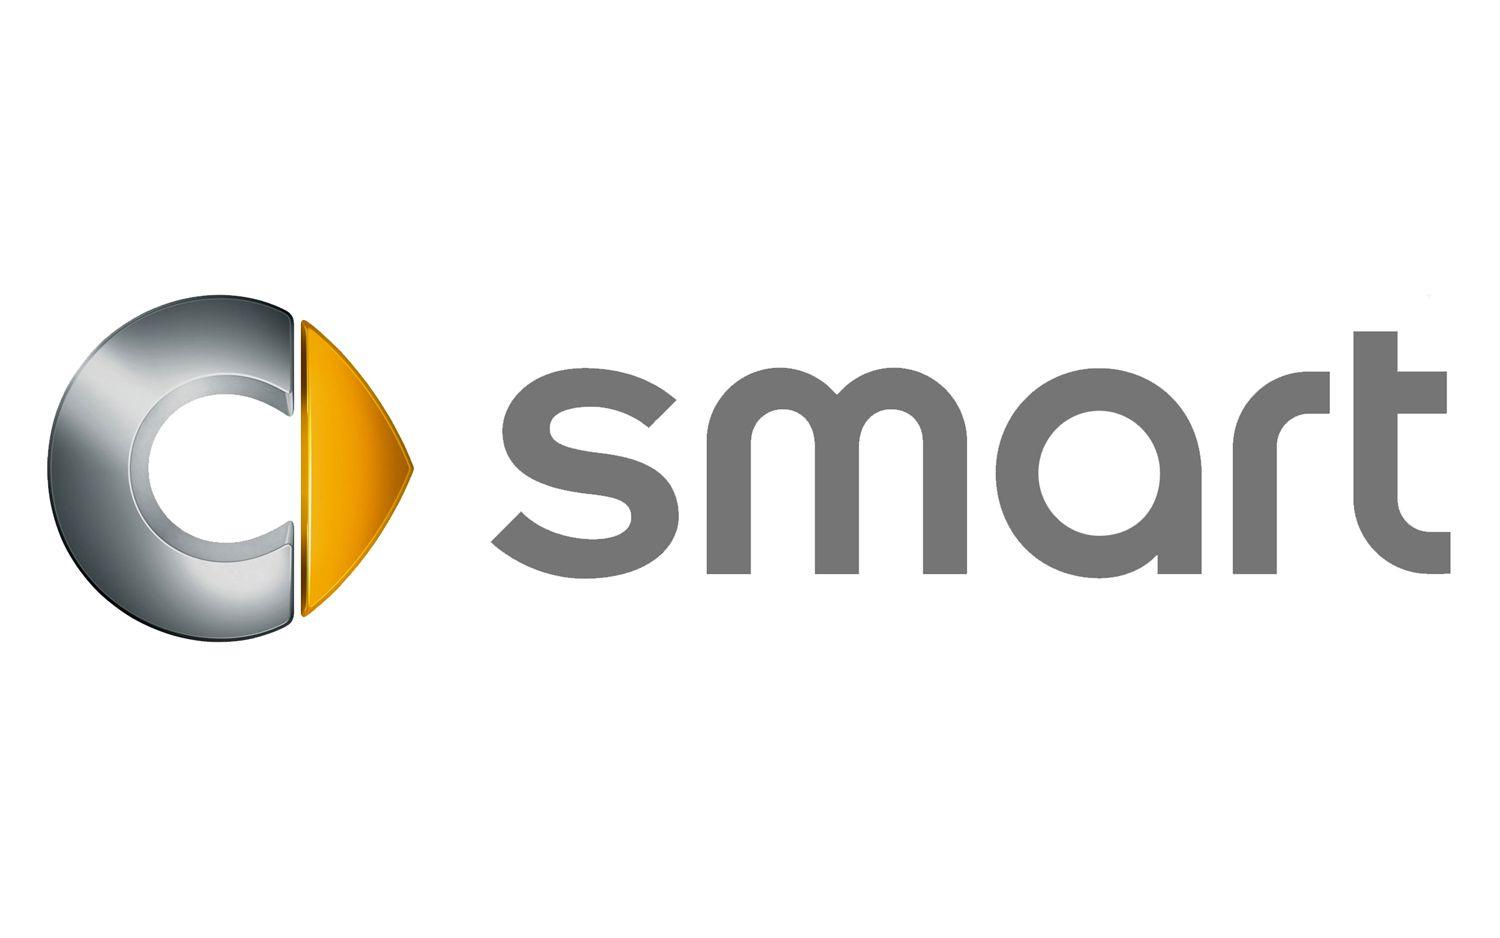 Silver Circle Car Logo - smart Logo, smart Car Symbol Meaning And History. Car Brand Names.com